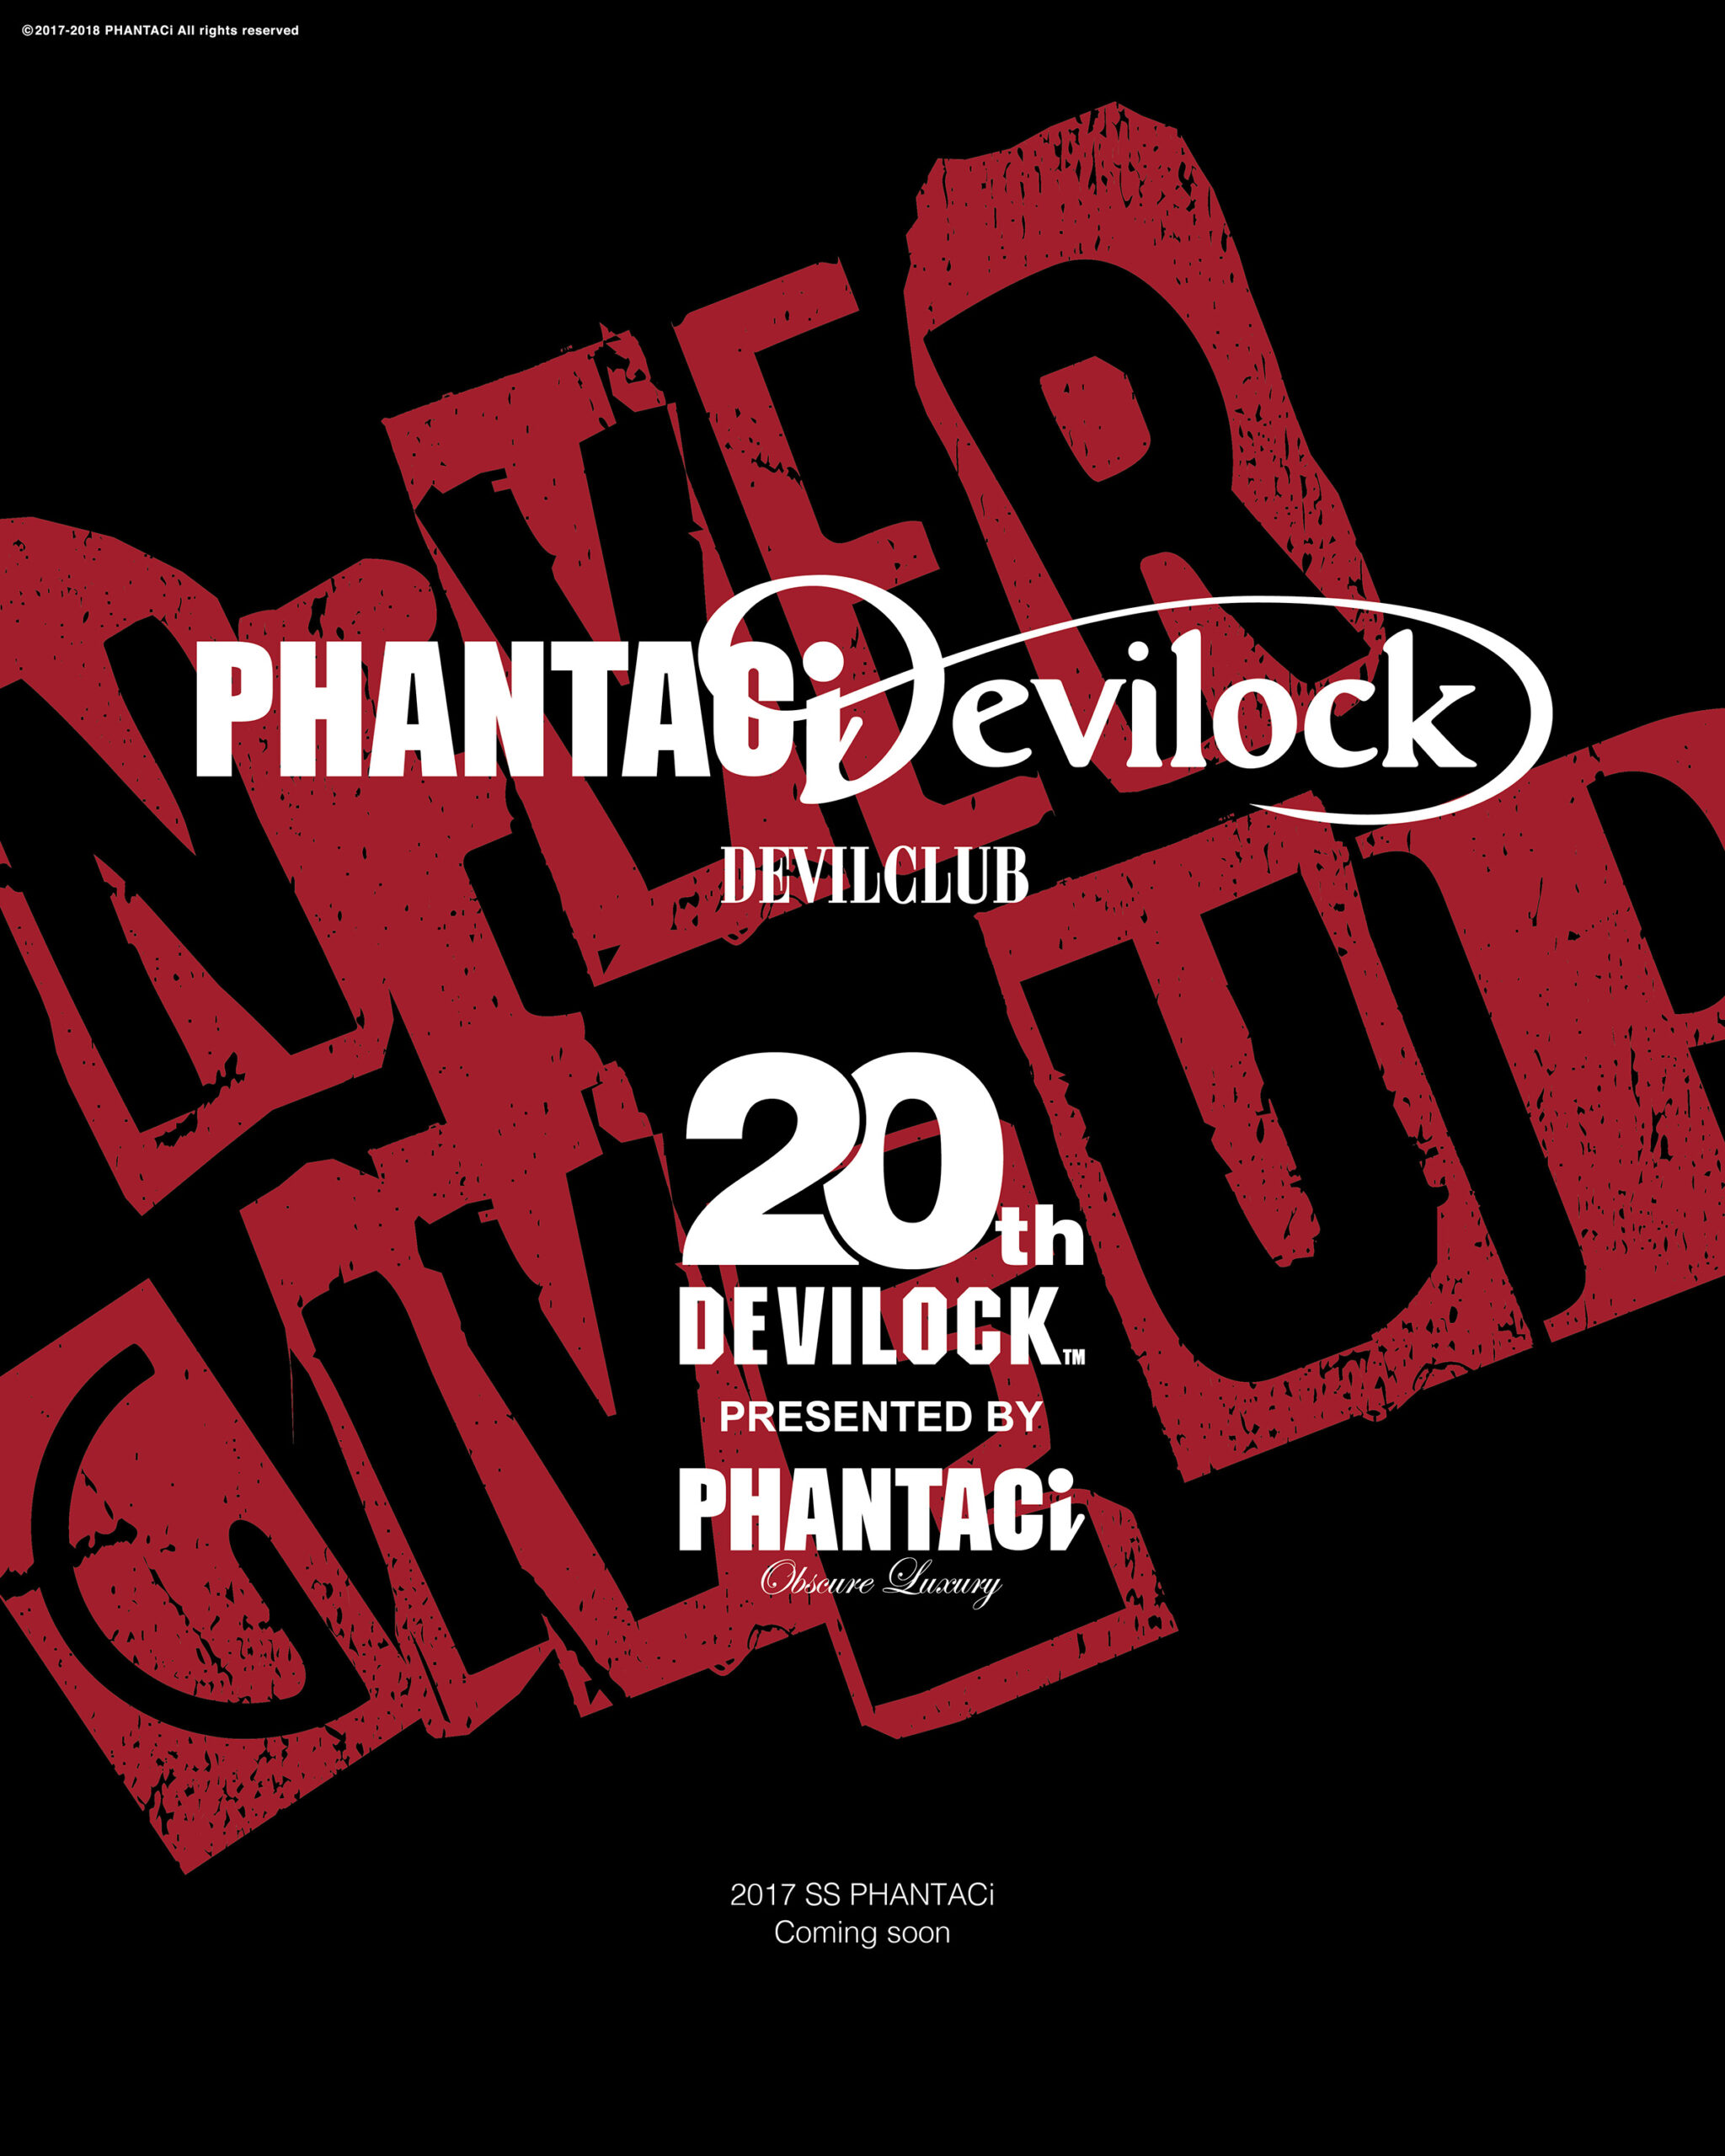 PHANTACi x DEVILOCK 搖滾重生 合奏演出 DevilCLUB 樂曲新章